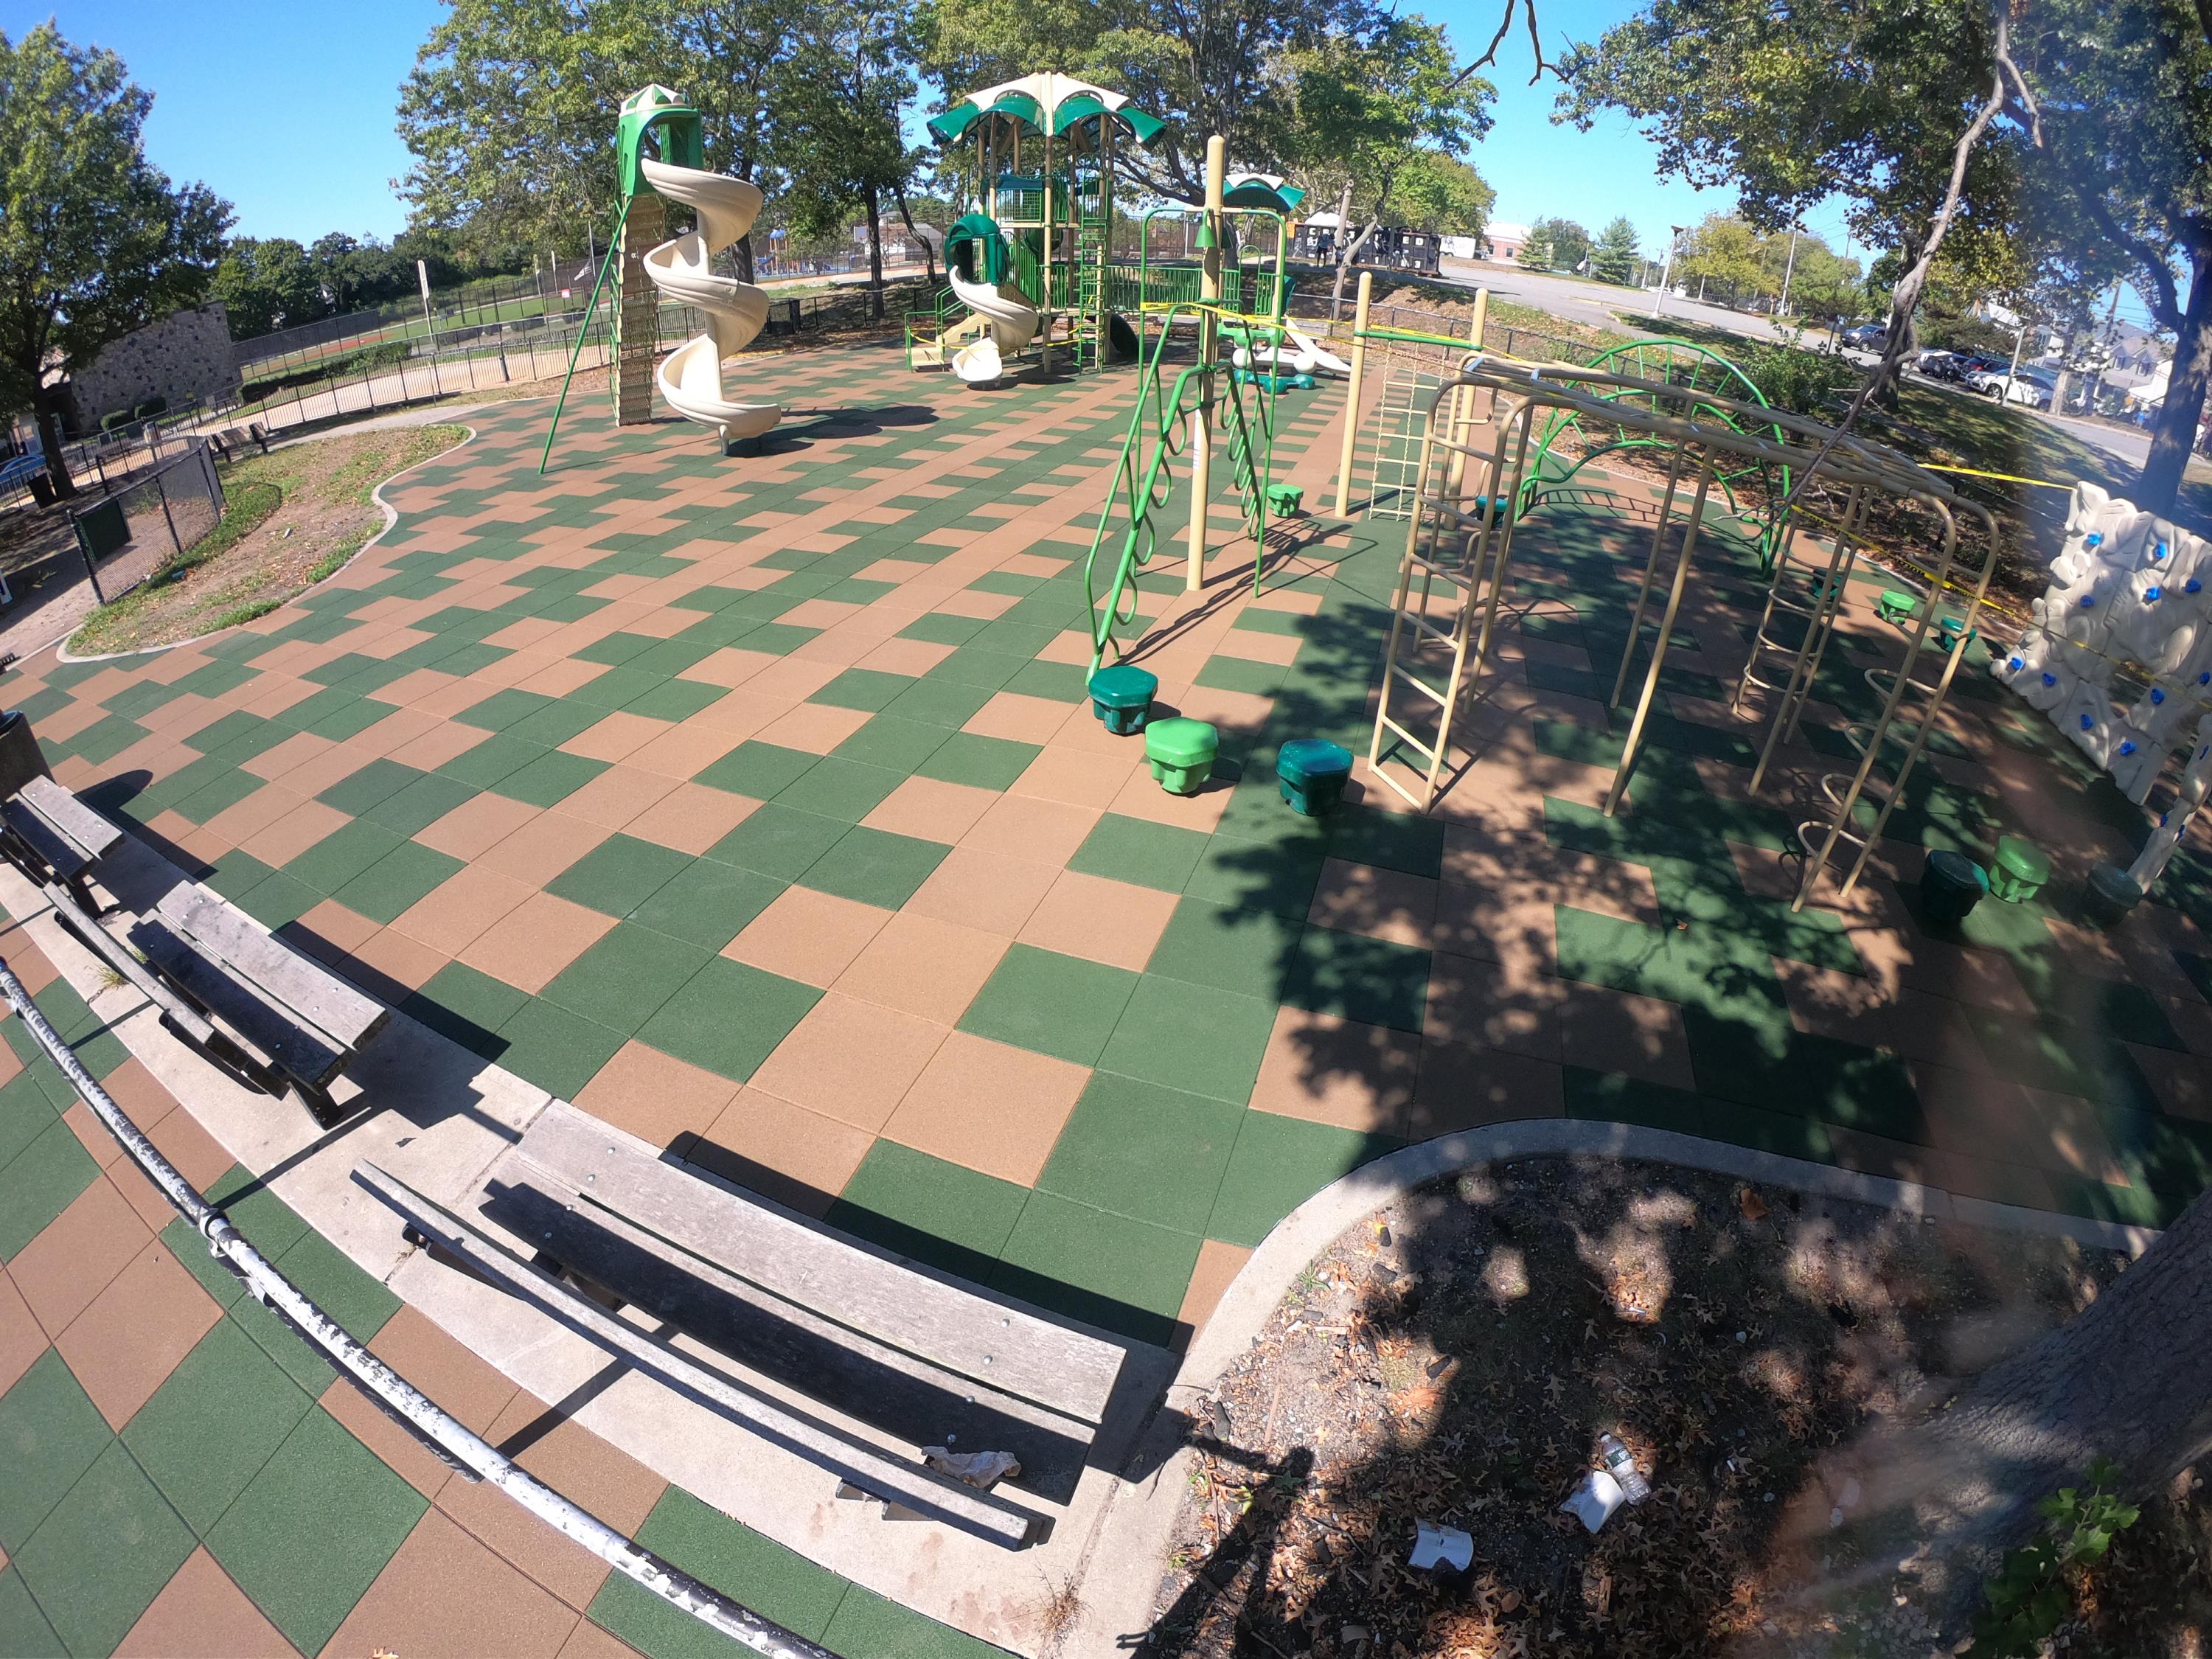 Unity's Interlocking rubber tiles on Park Playground